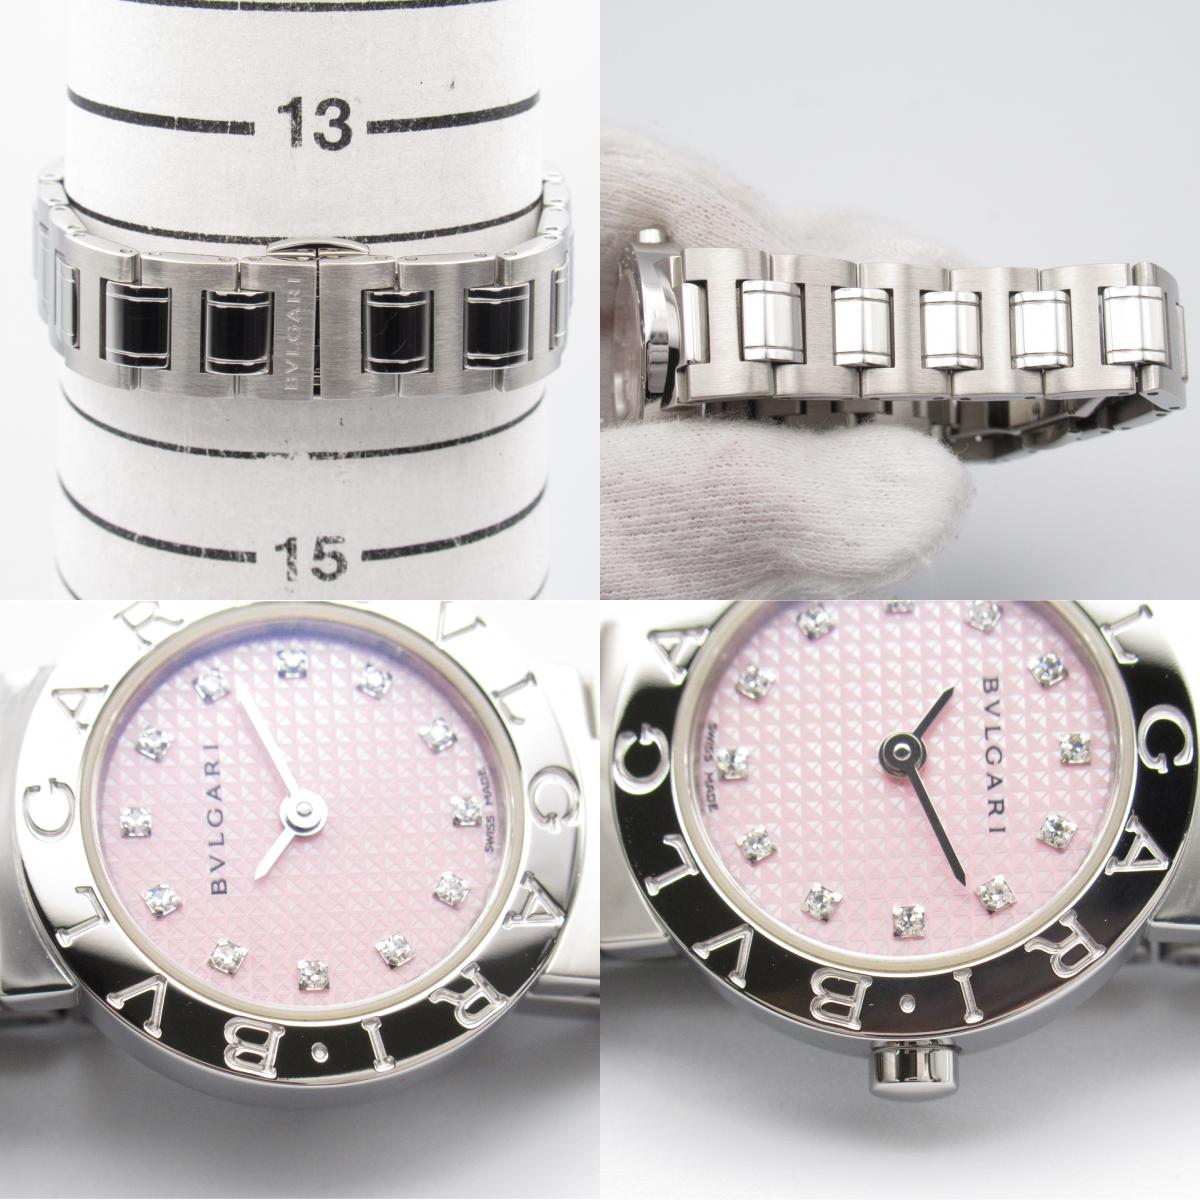 Bulgari BVLGARI n 12P Diamond  Watch Stainless Steel  Pink BB23SS